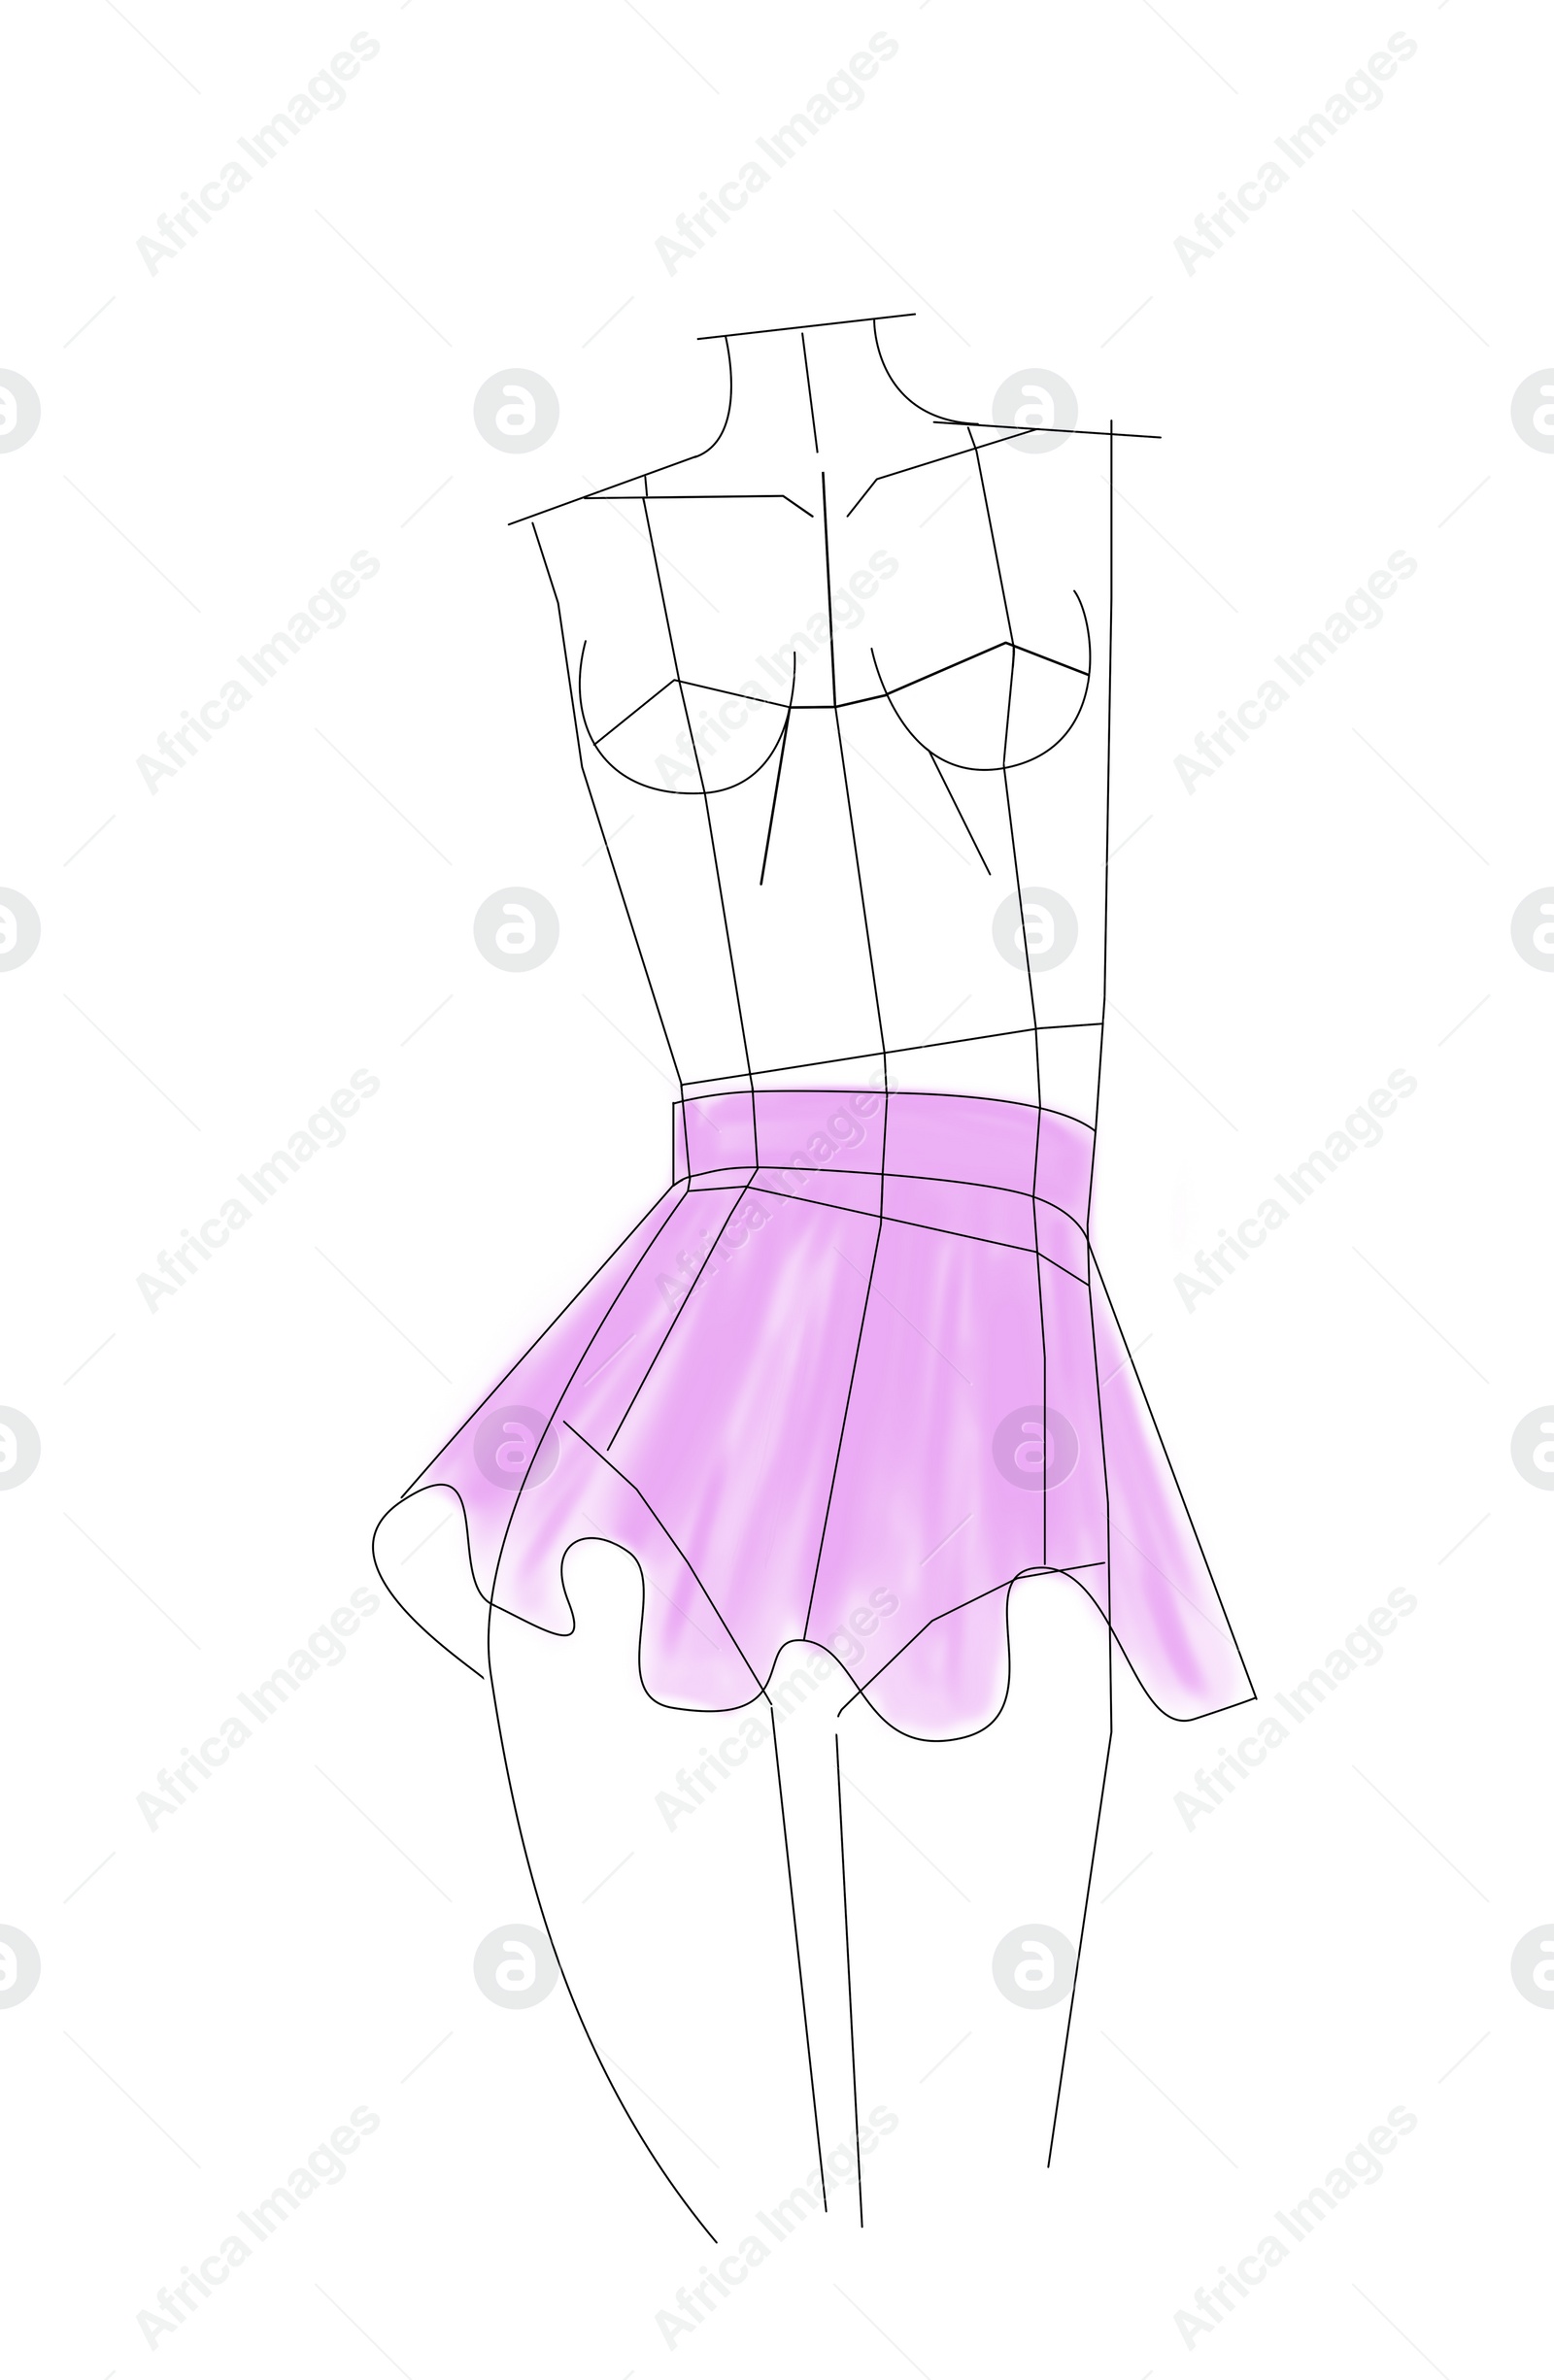 Illustration of Fashion sketch. Stylish skirt on mannequin against white background, illustration